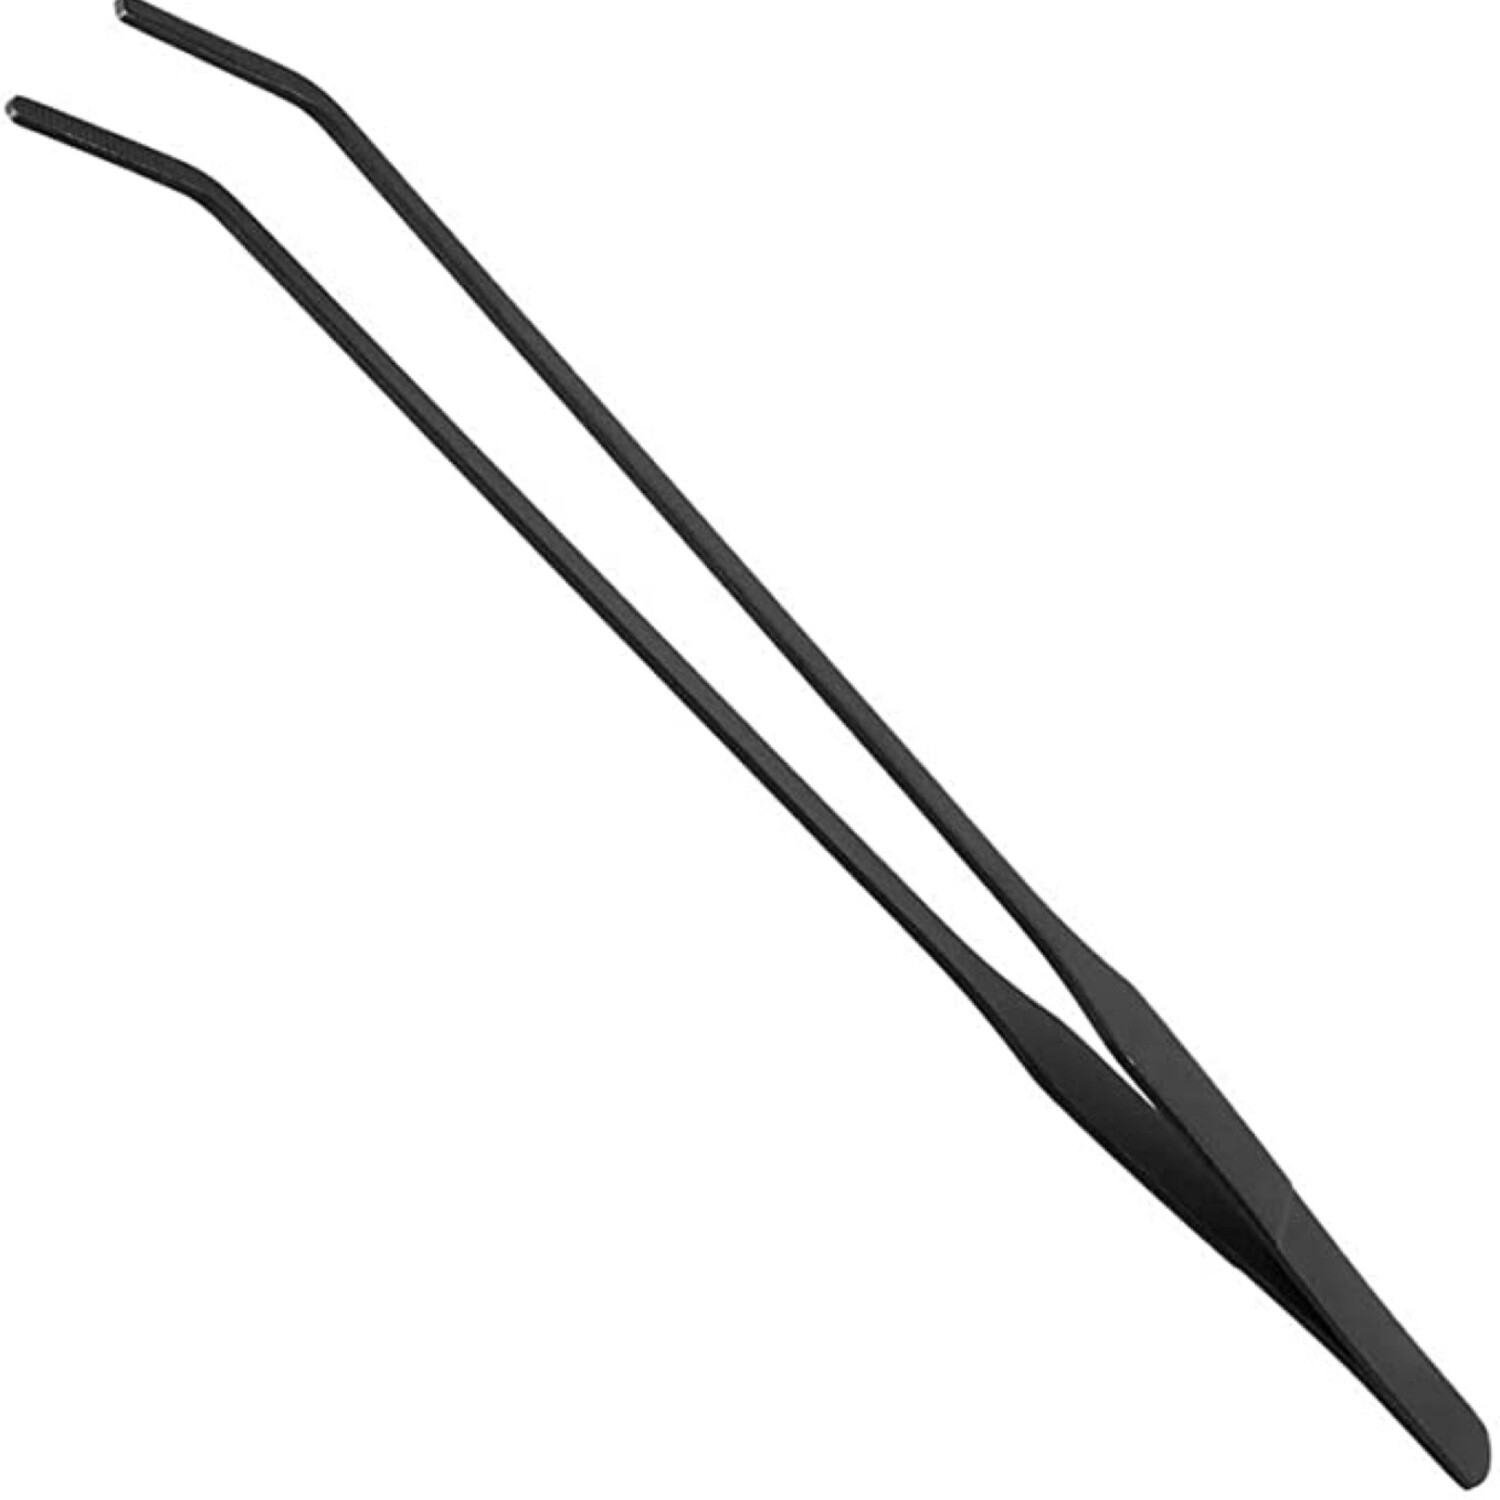 15 inch Black Curved Aquarium Tweezers Forceps Stainless Coated